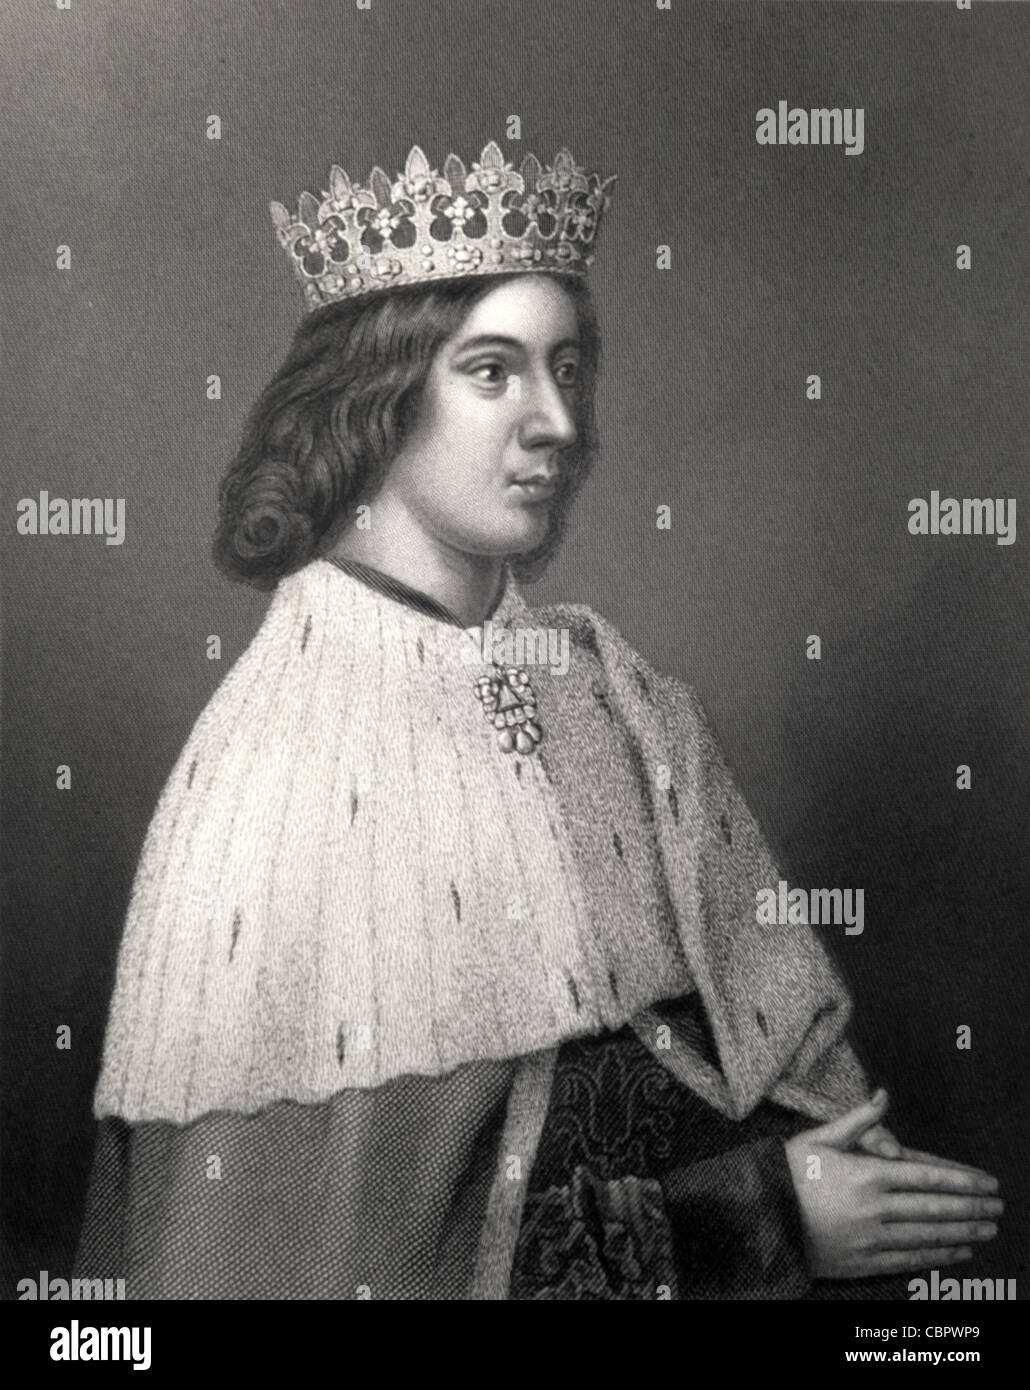 Portrait of King James III (1451-1488) King of Scotland (1460-1488) c19th Engraving by G. J. Stodart. Portrait Wearing Crown. Vintage Illustration or Engraving Stock Photo